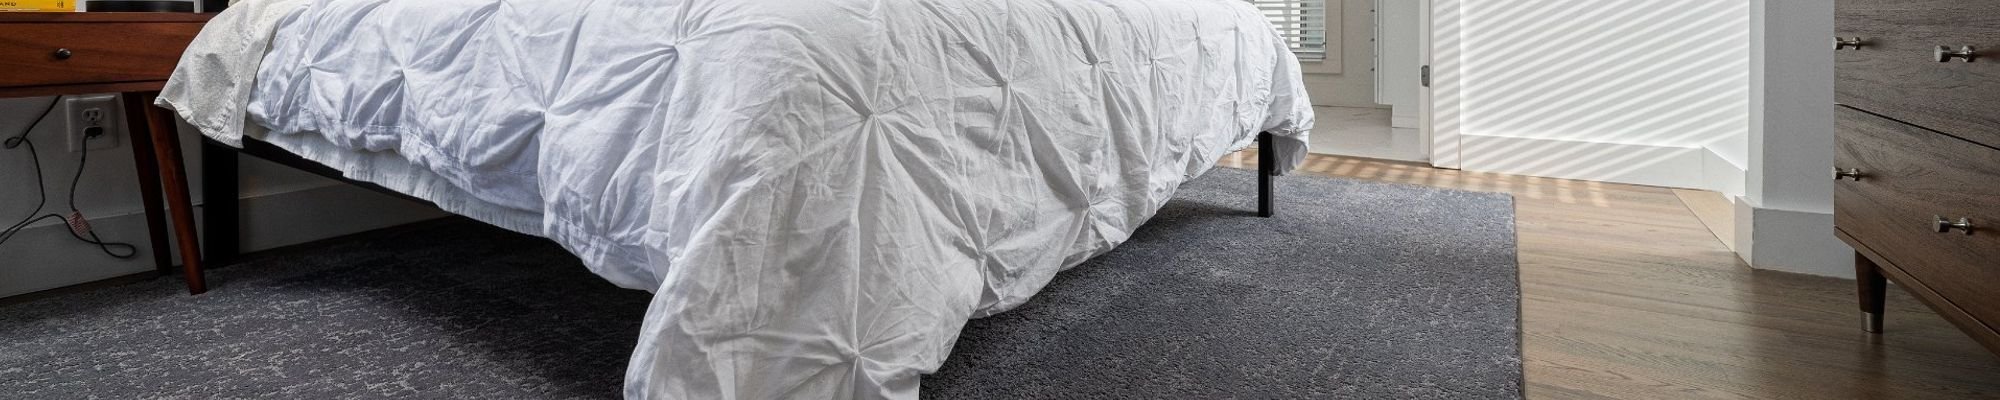 bed with white duvet on dark grey area rug - Carpet Plus Flooring LLC